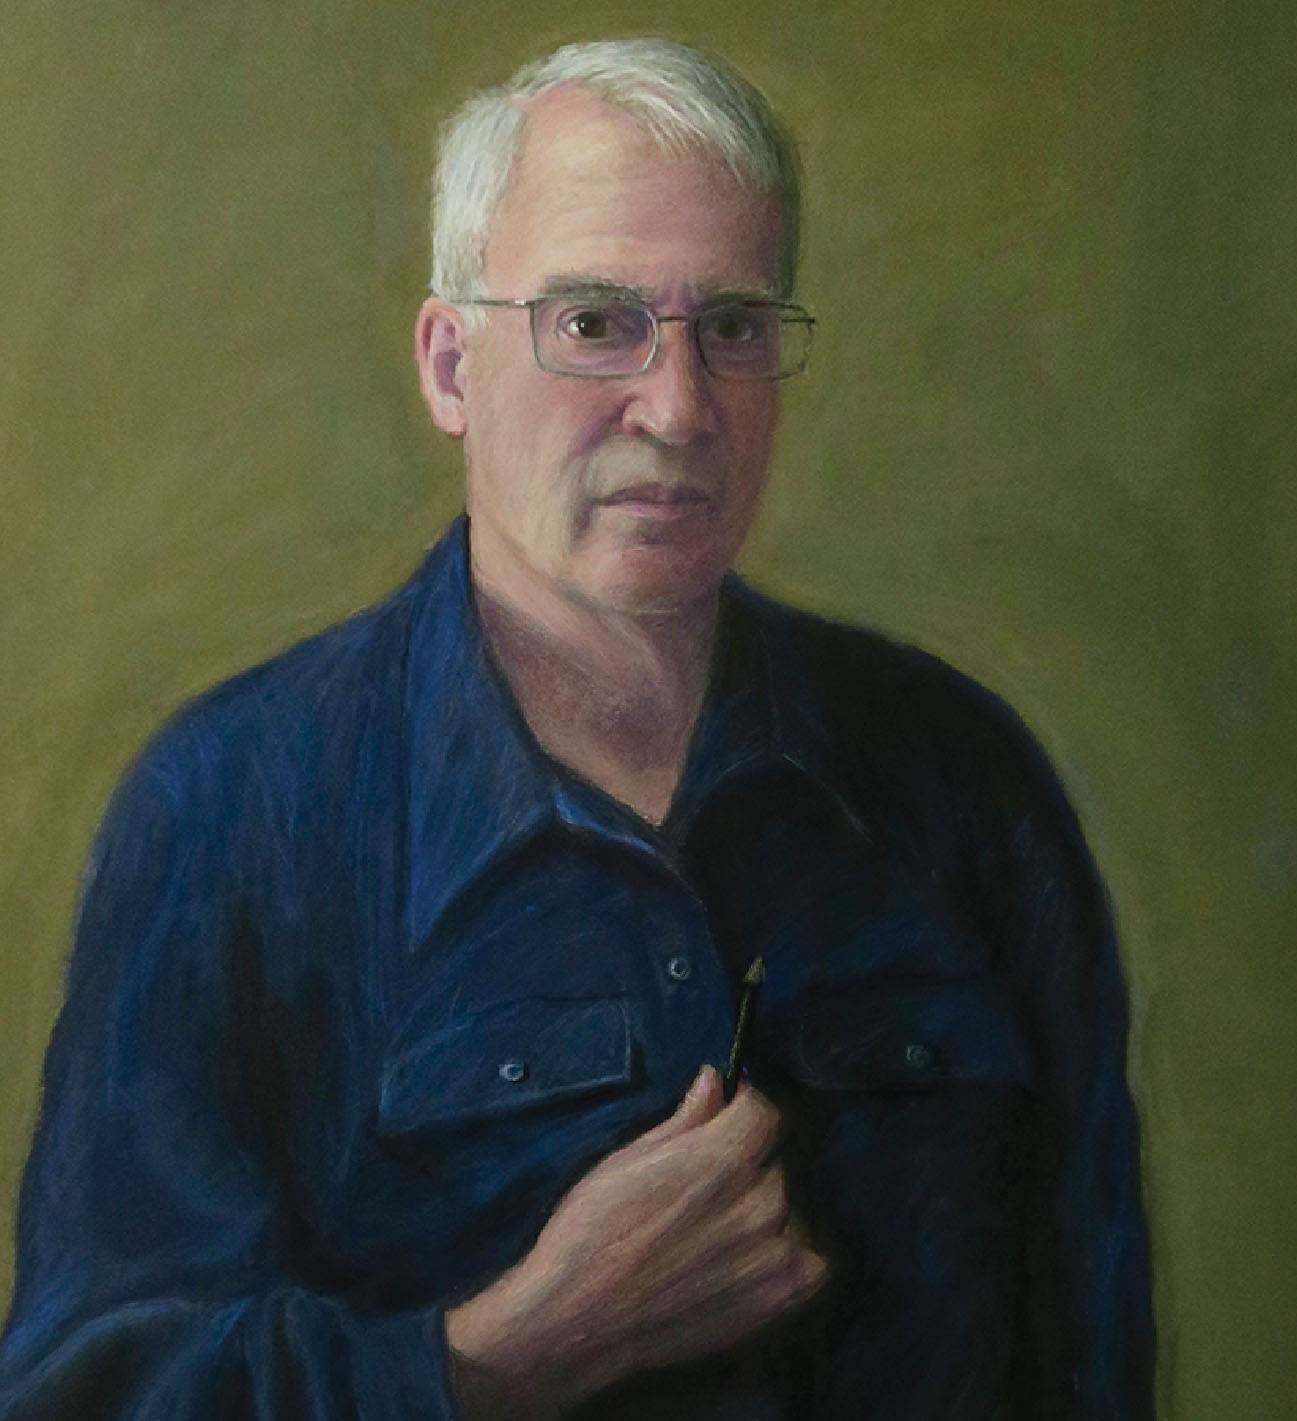 painted self portrait of man